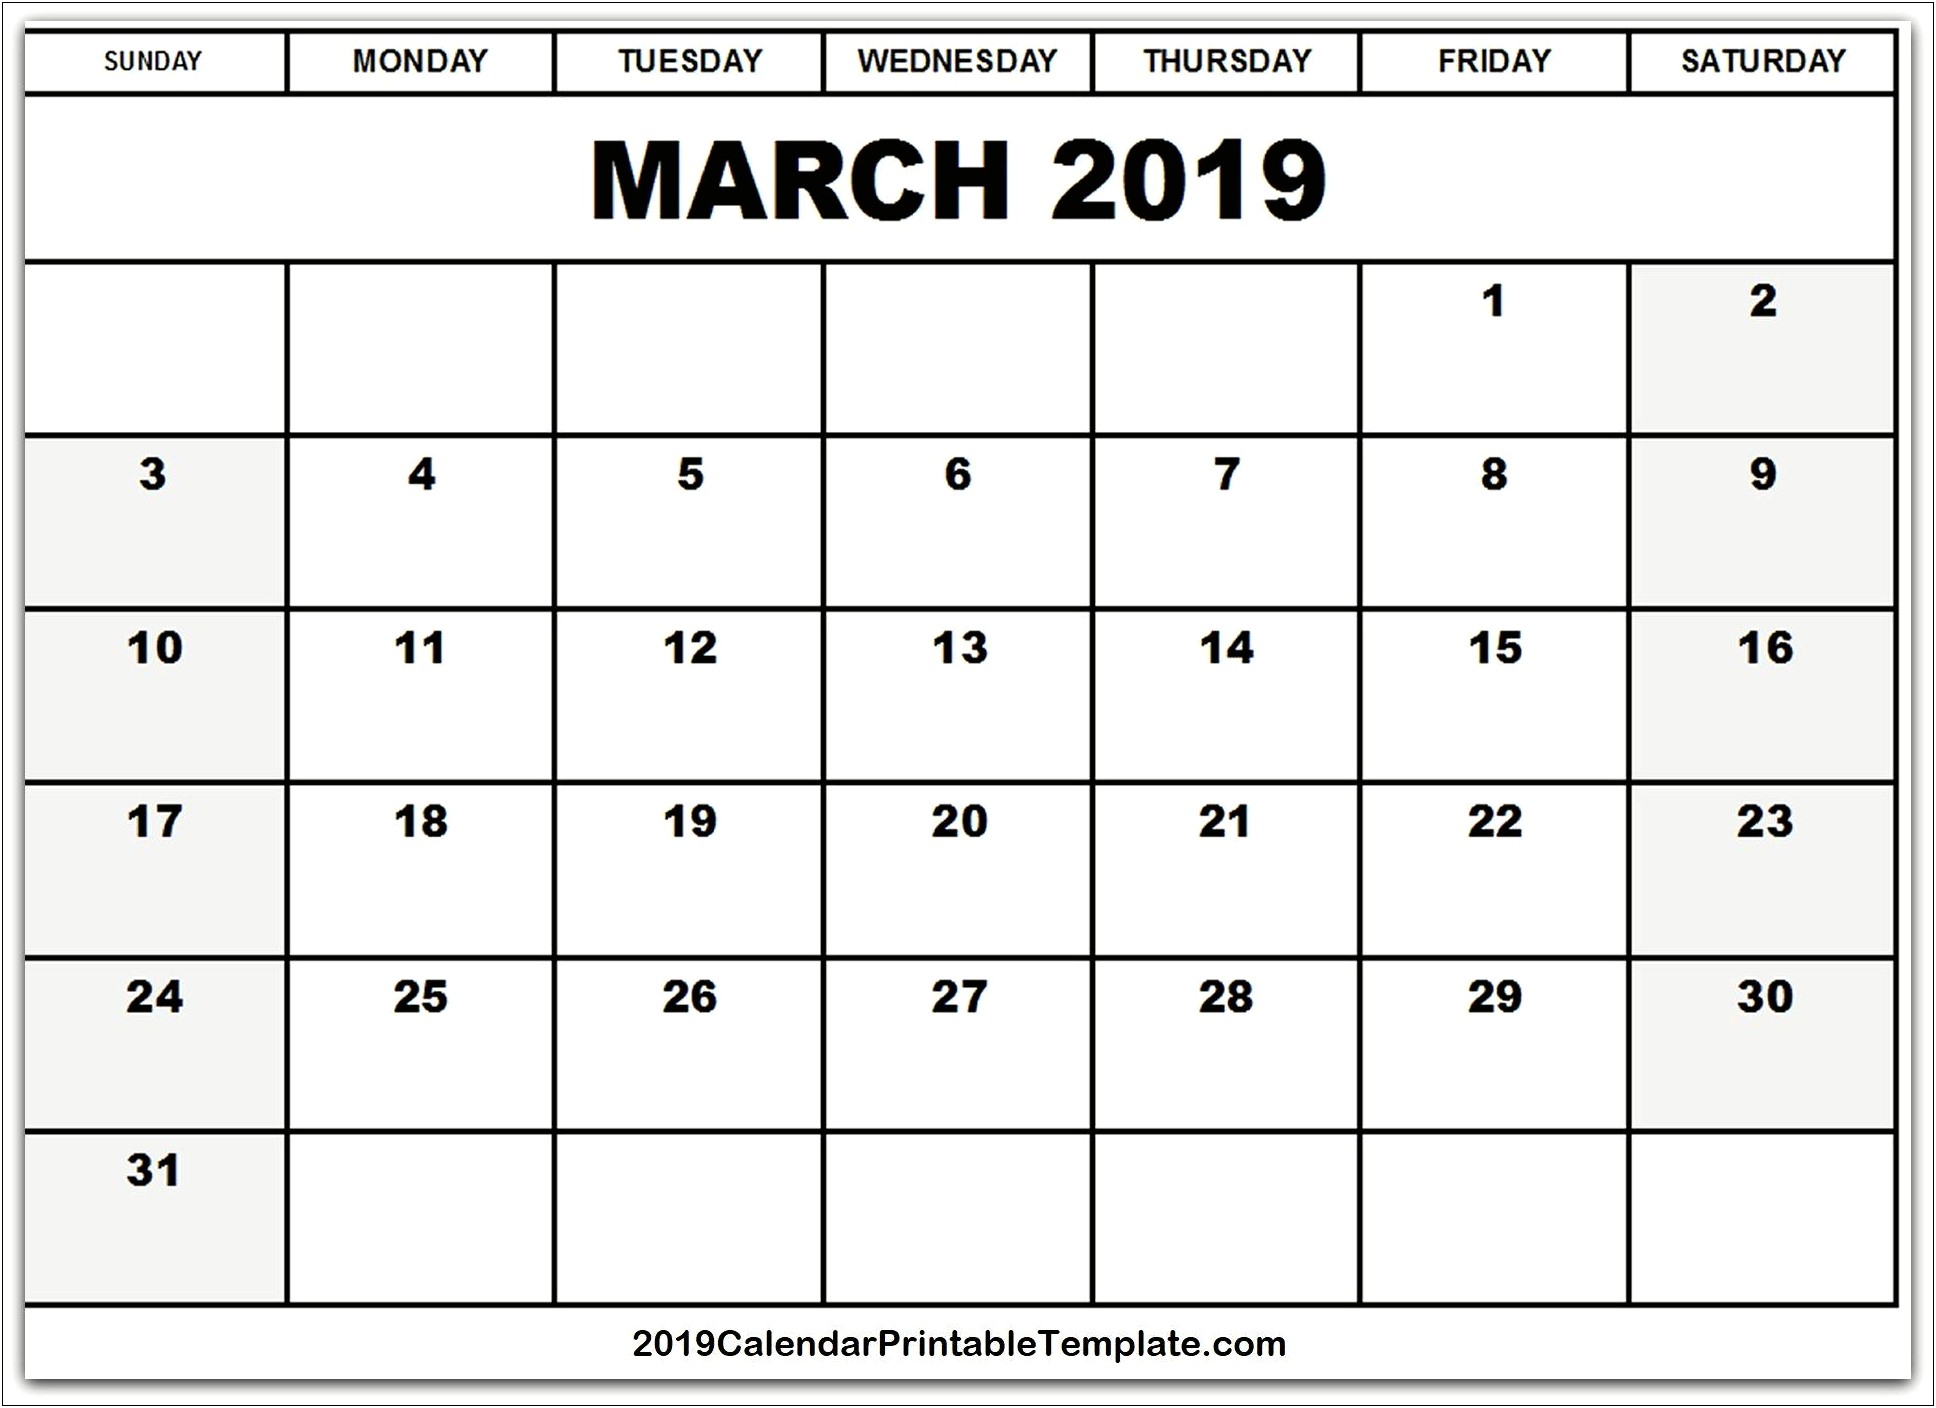 Free Calendar Template 2019 For Mac